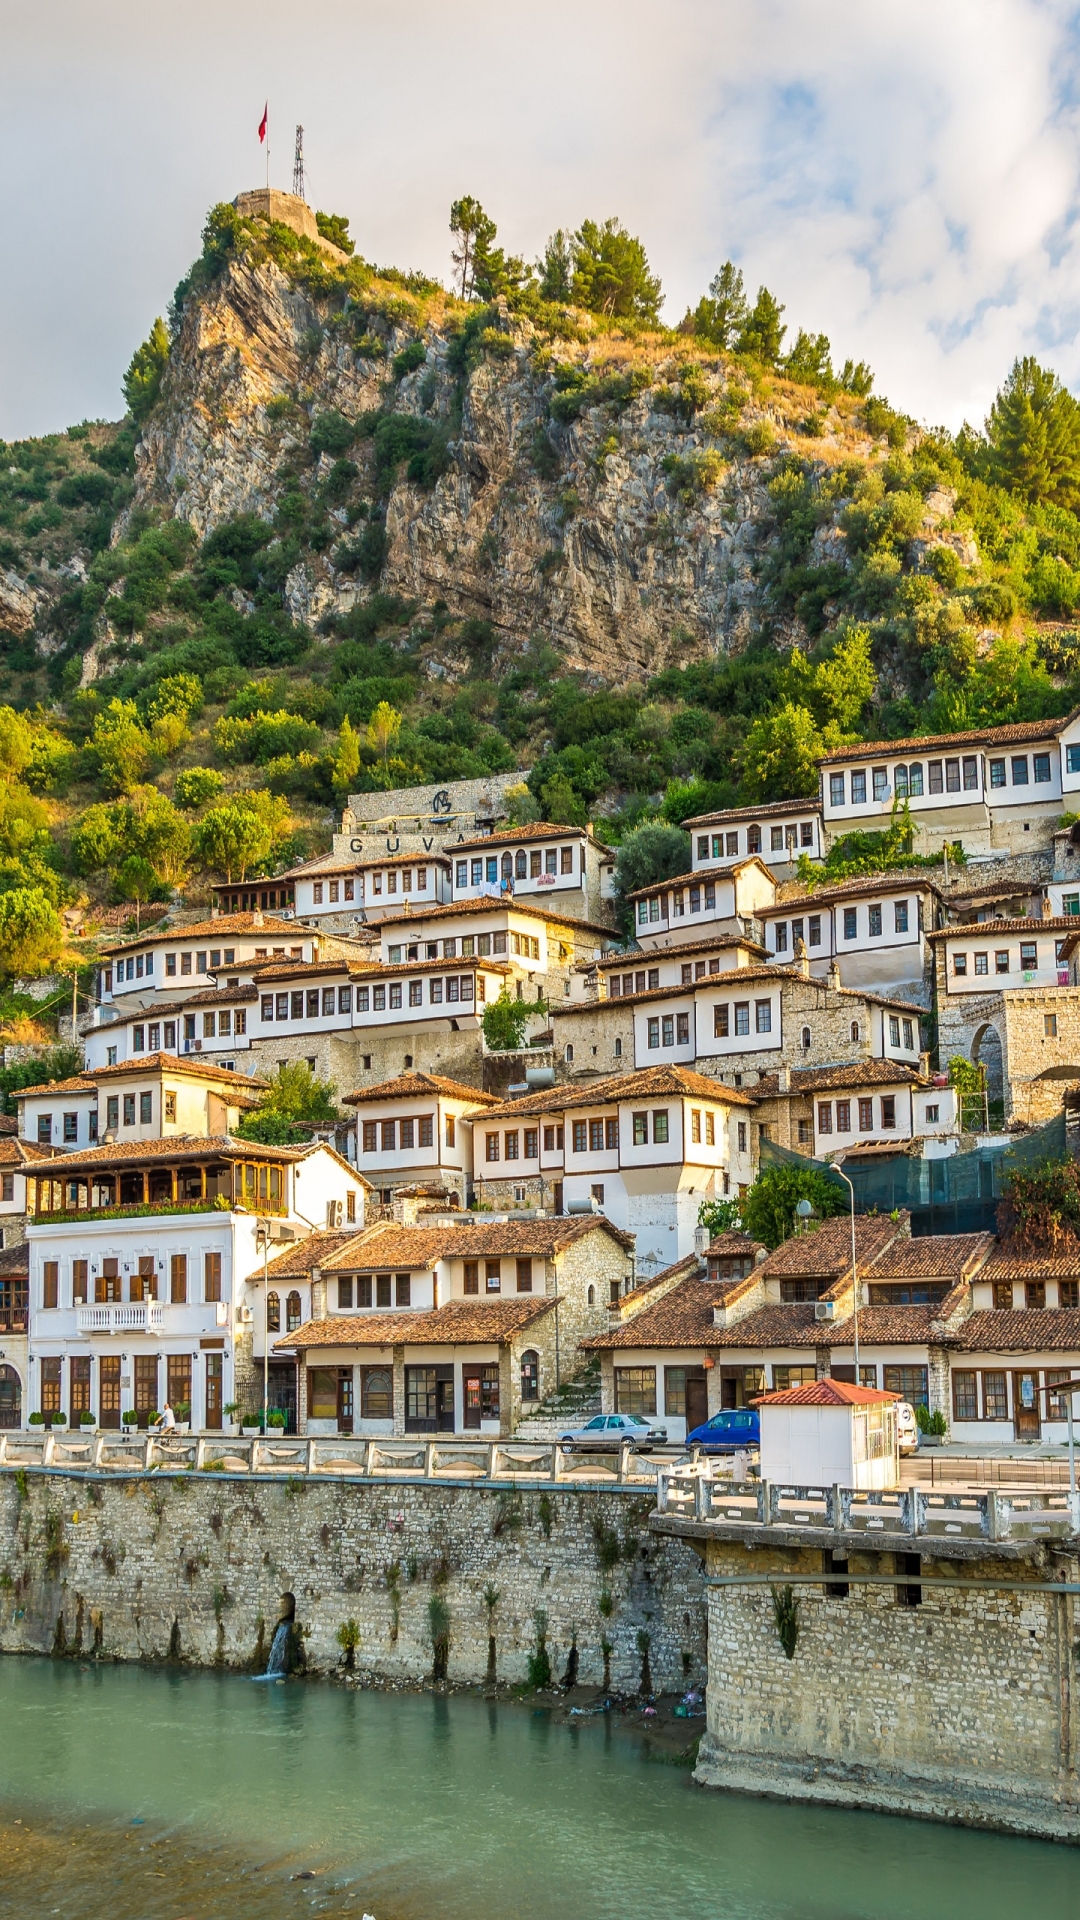 Berat City Albania for Samsung A9 Pro & A7 resolution